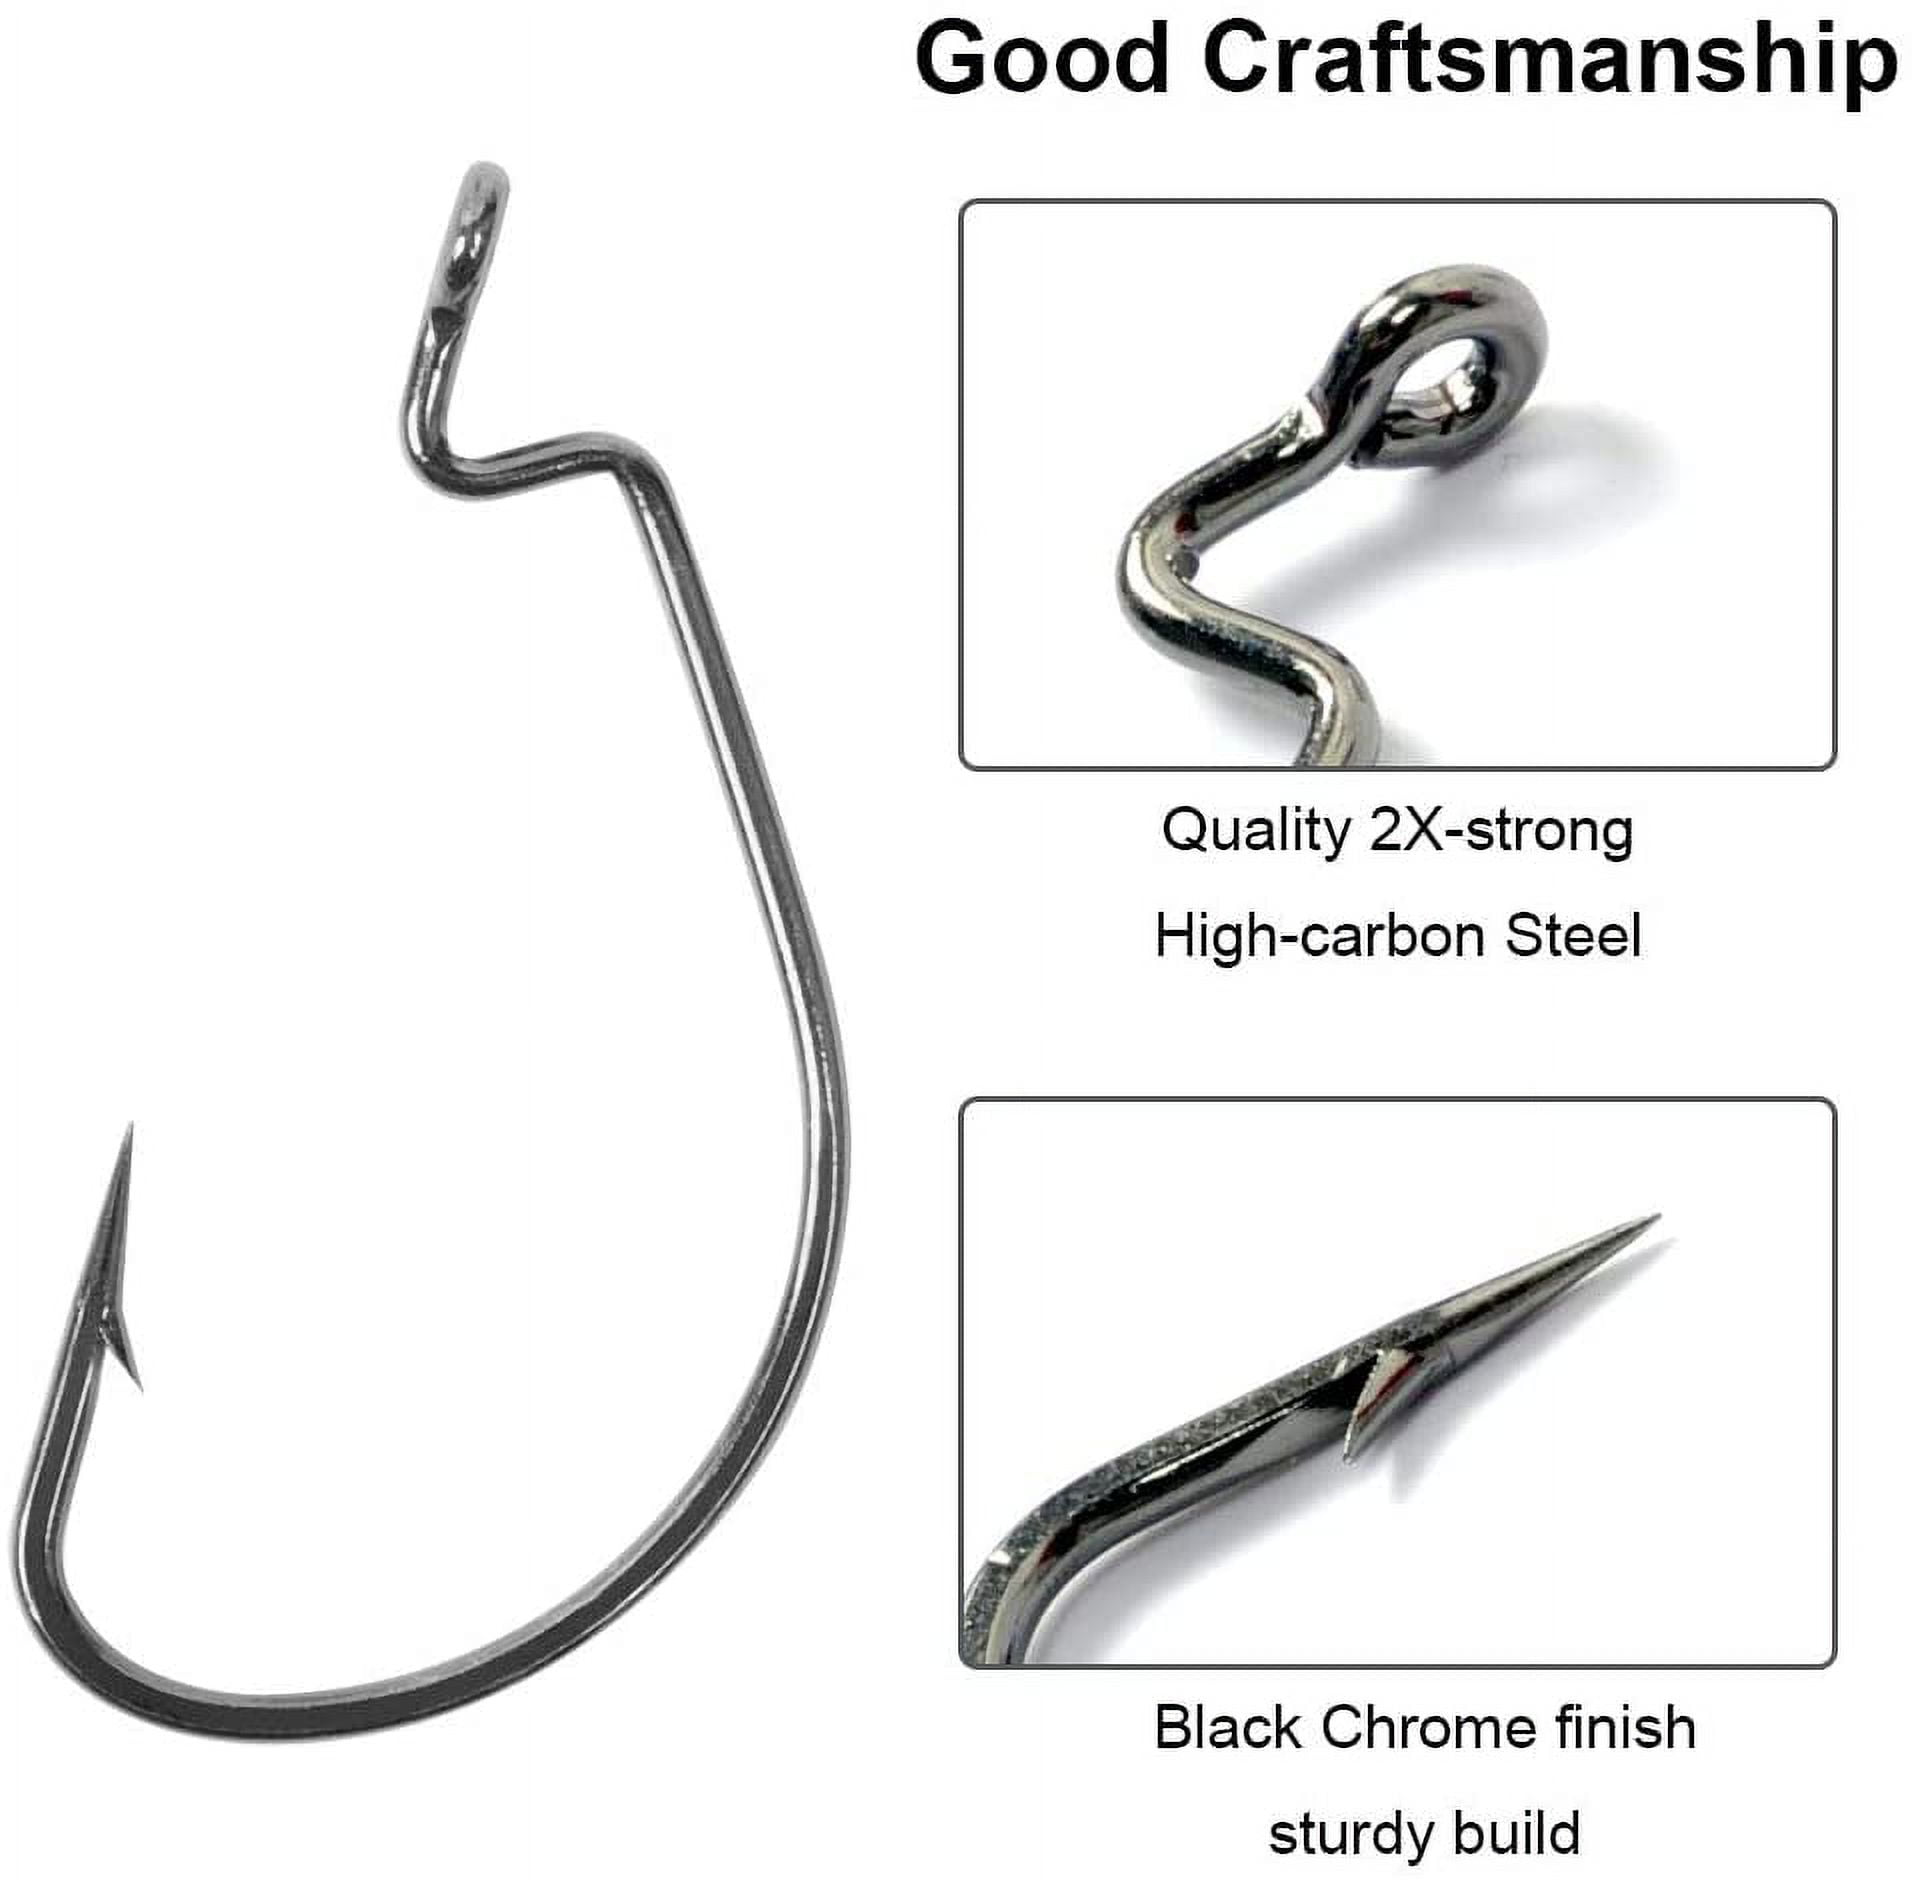 Mosodo 50pcs/lot Drop Shot Fishing Hooks Wide Gap Bass Fishhooks for Senko  Worm Lures #4 #2 #1 1/0 2/0 pesca Tackle Accessories